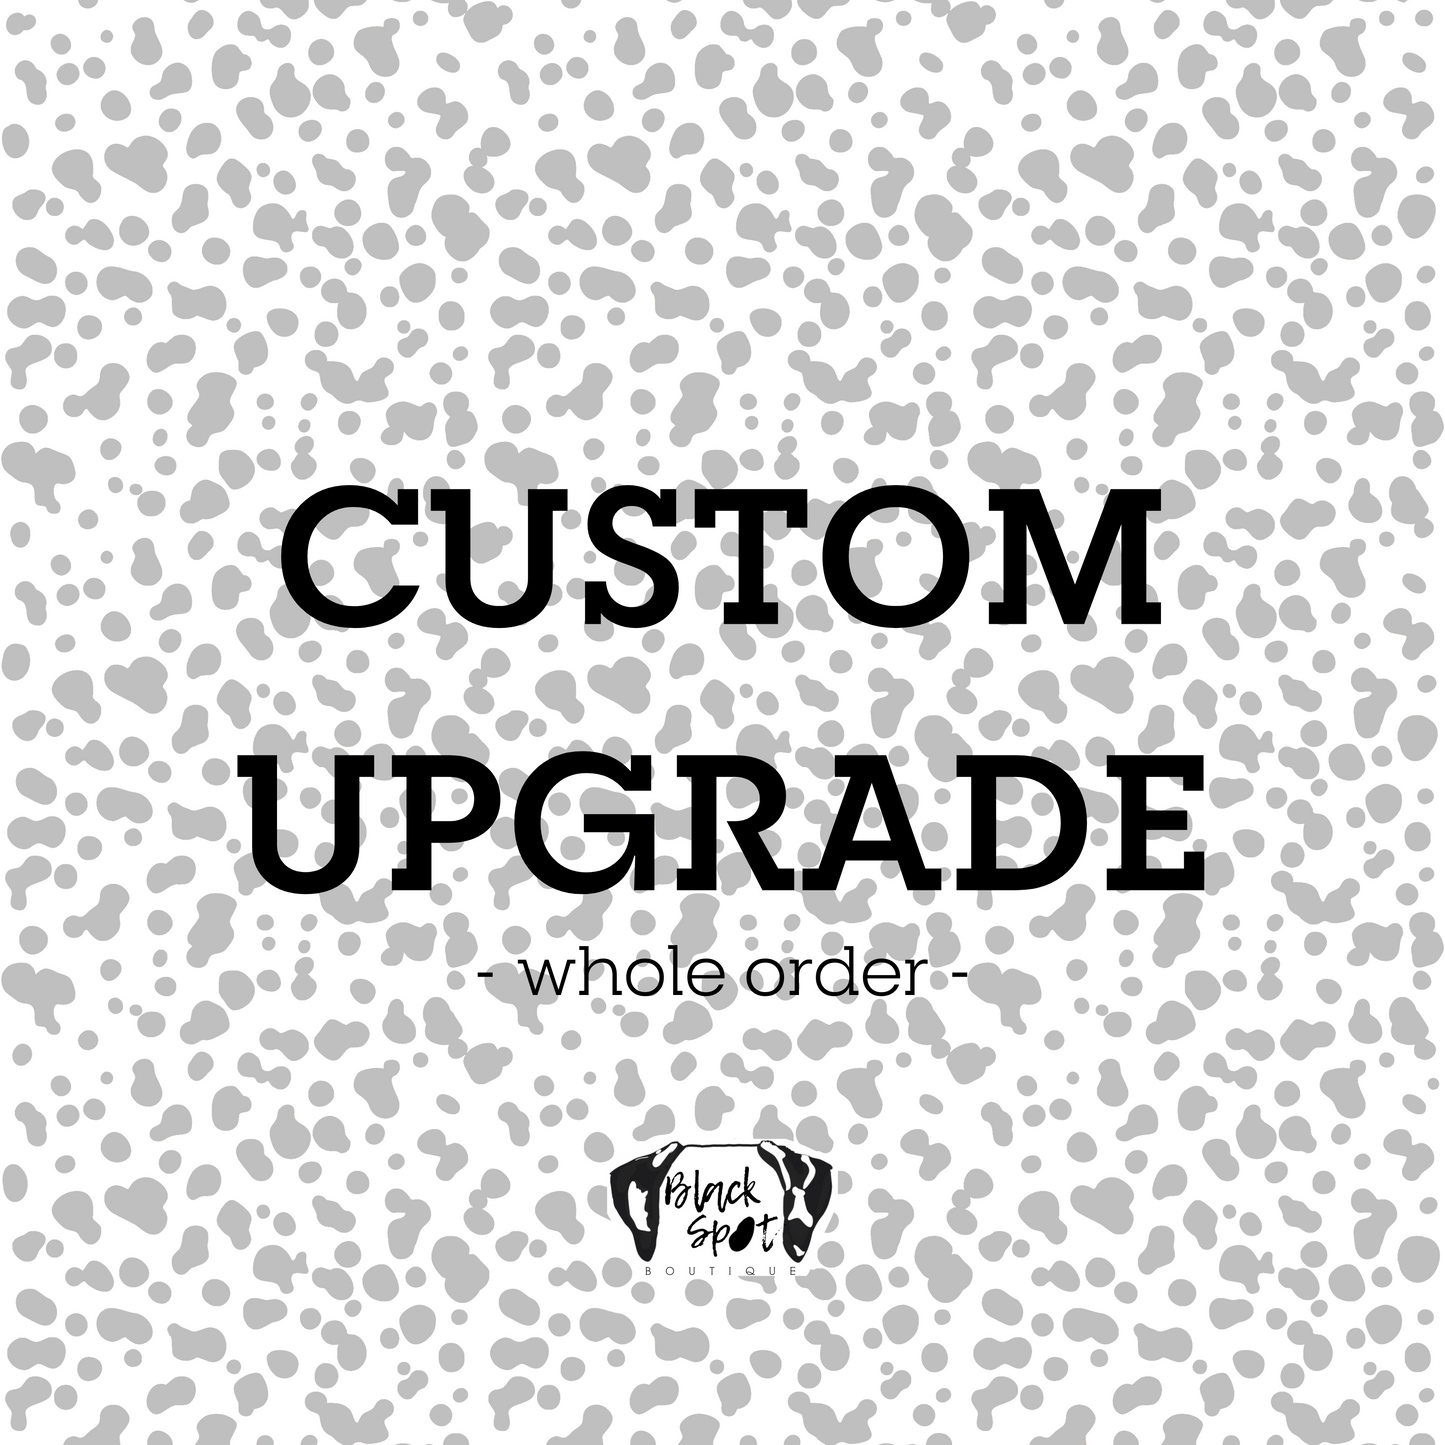 Copy of Custom Upgrade - Whole Order